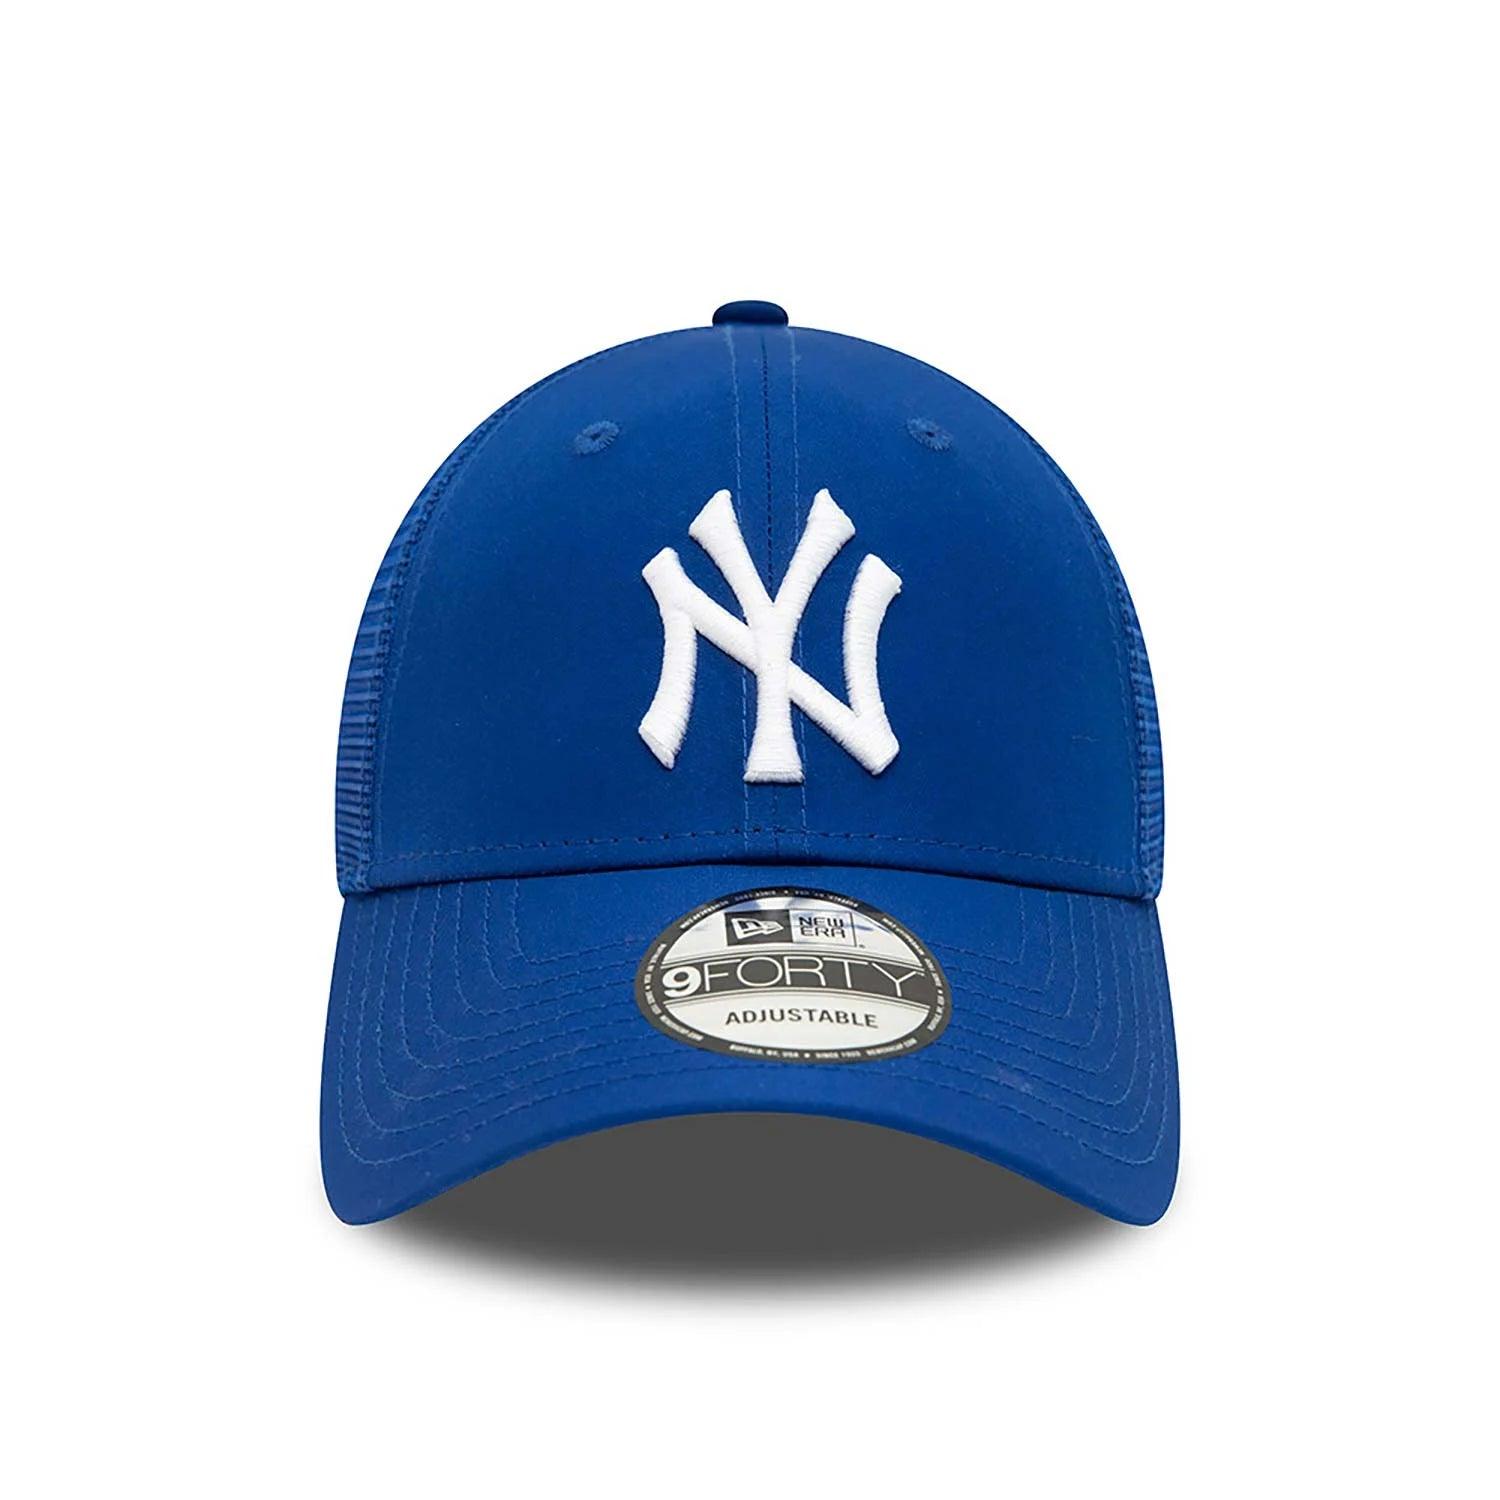 NEW ERA 9FORTY NEW YORK YANKEES HOME FIELD BLUE CAP - FAM